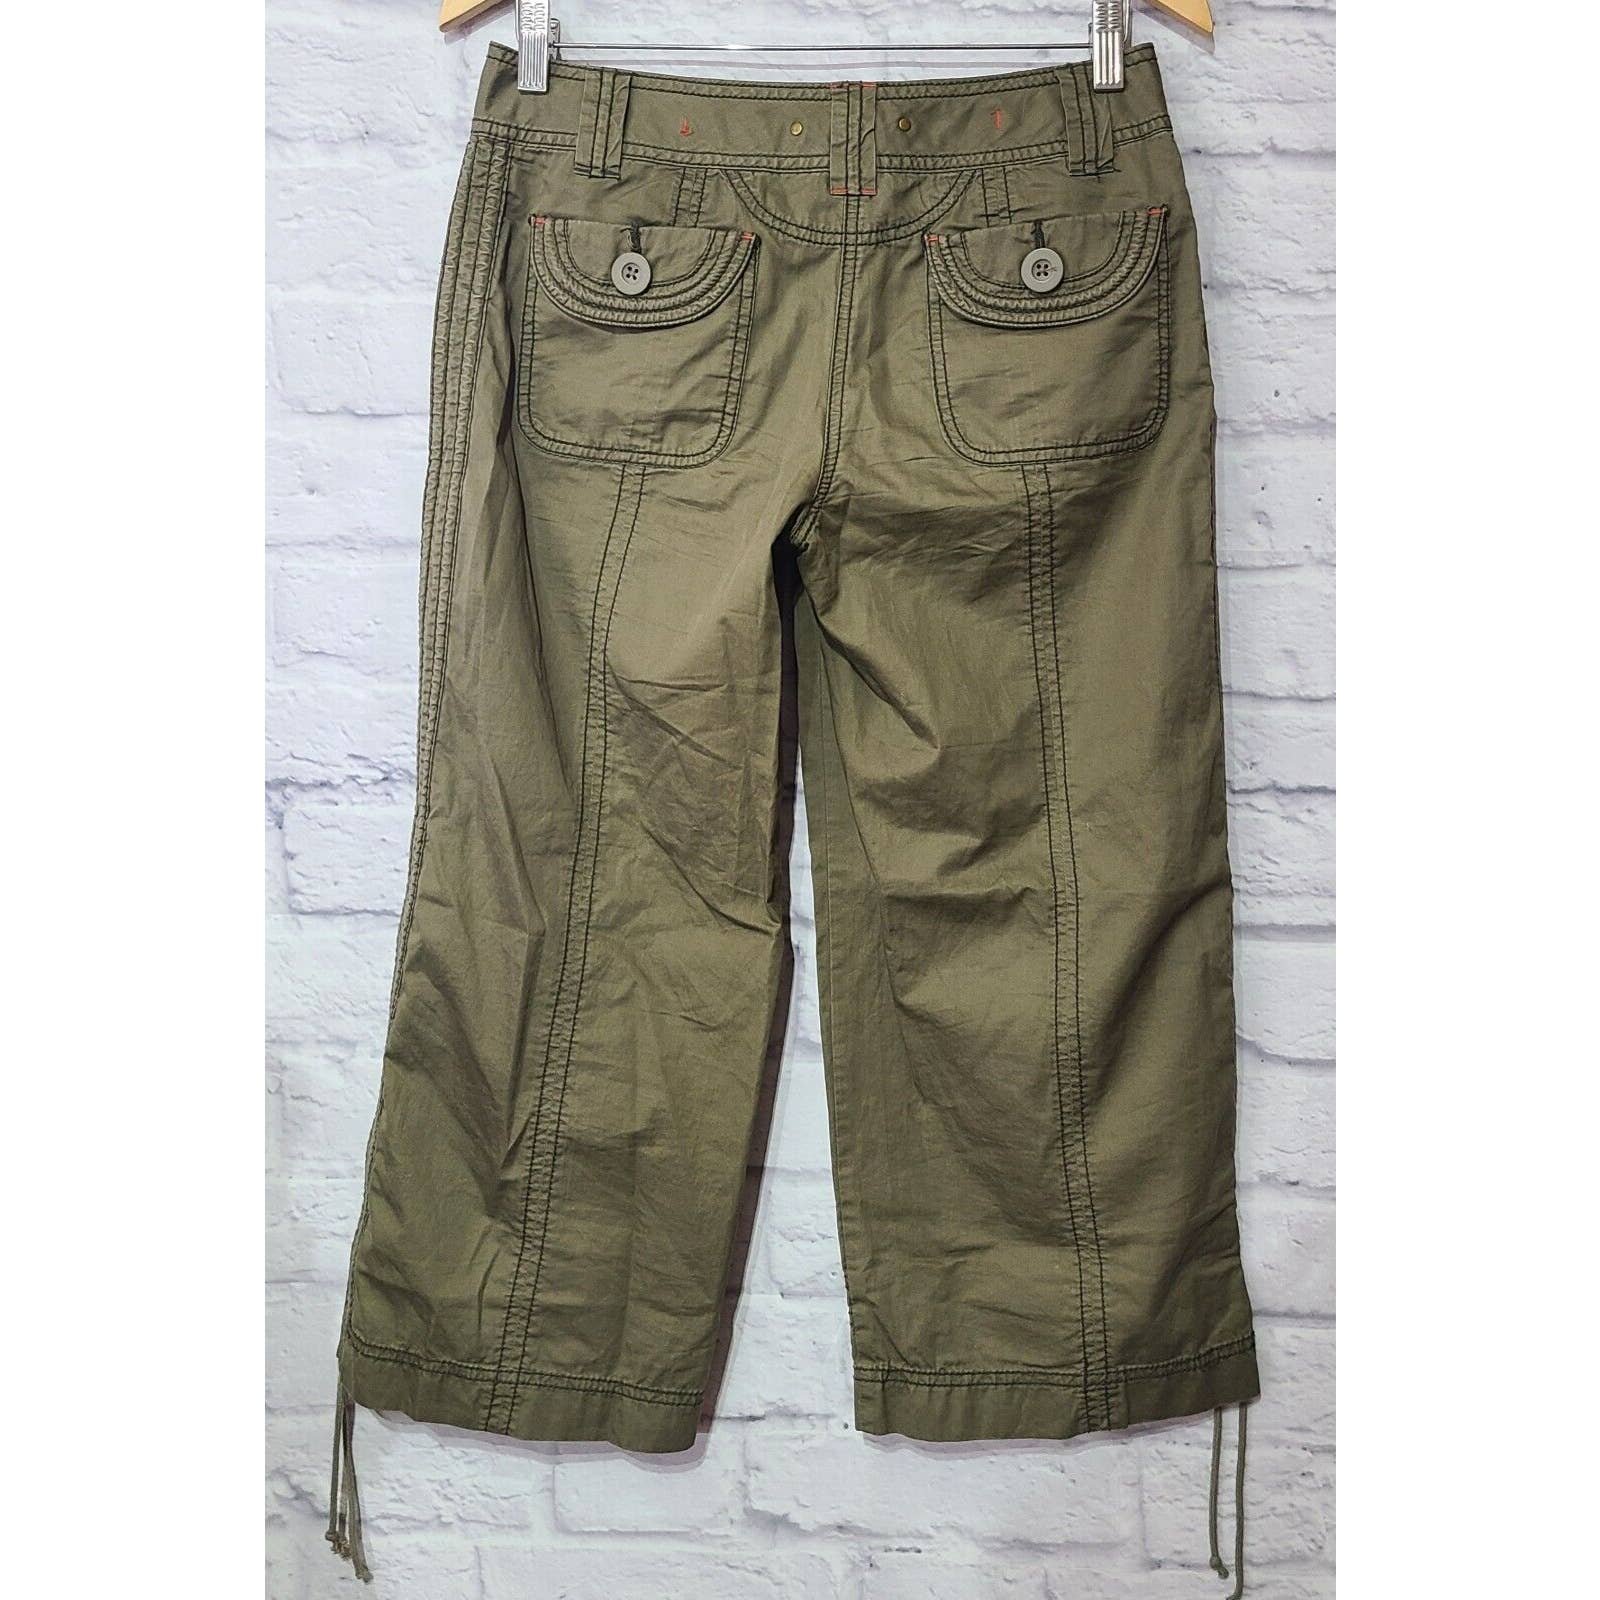 reasonable price Anthropologie Hei Hei Capri Pants Women´s 2 Olive Green Leg Drawstrings Pockets IHIwcgiOS Factory Price